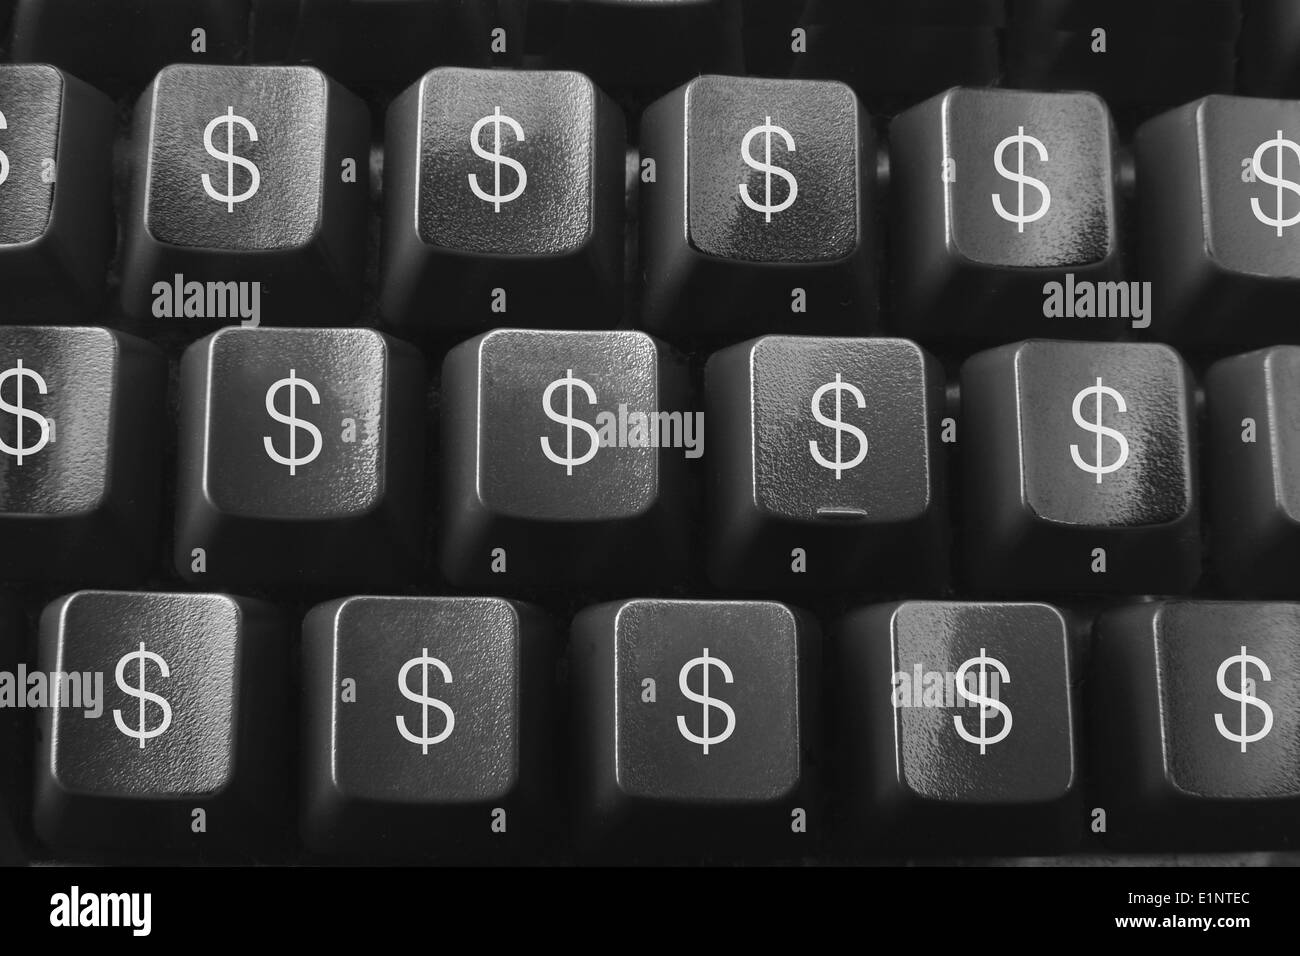 Computer Keyboard with Dollar Symbols Stock Photo - Alamy